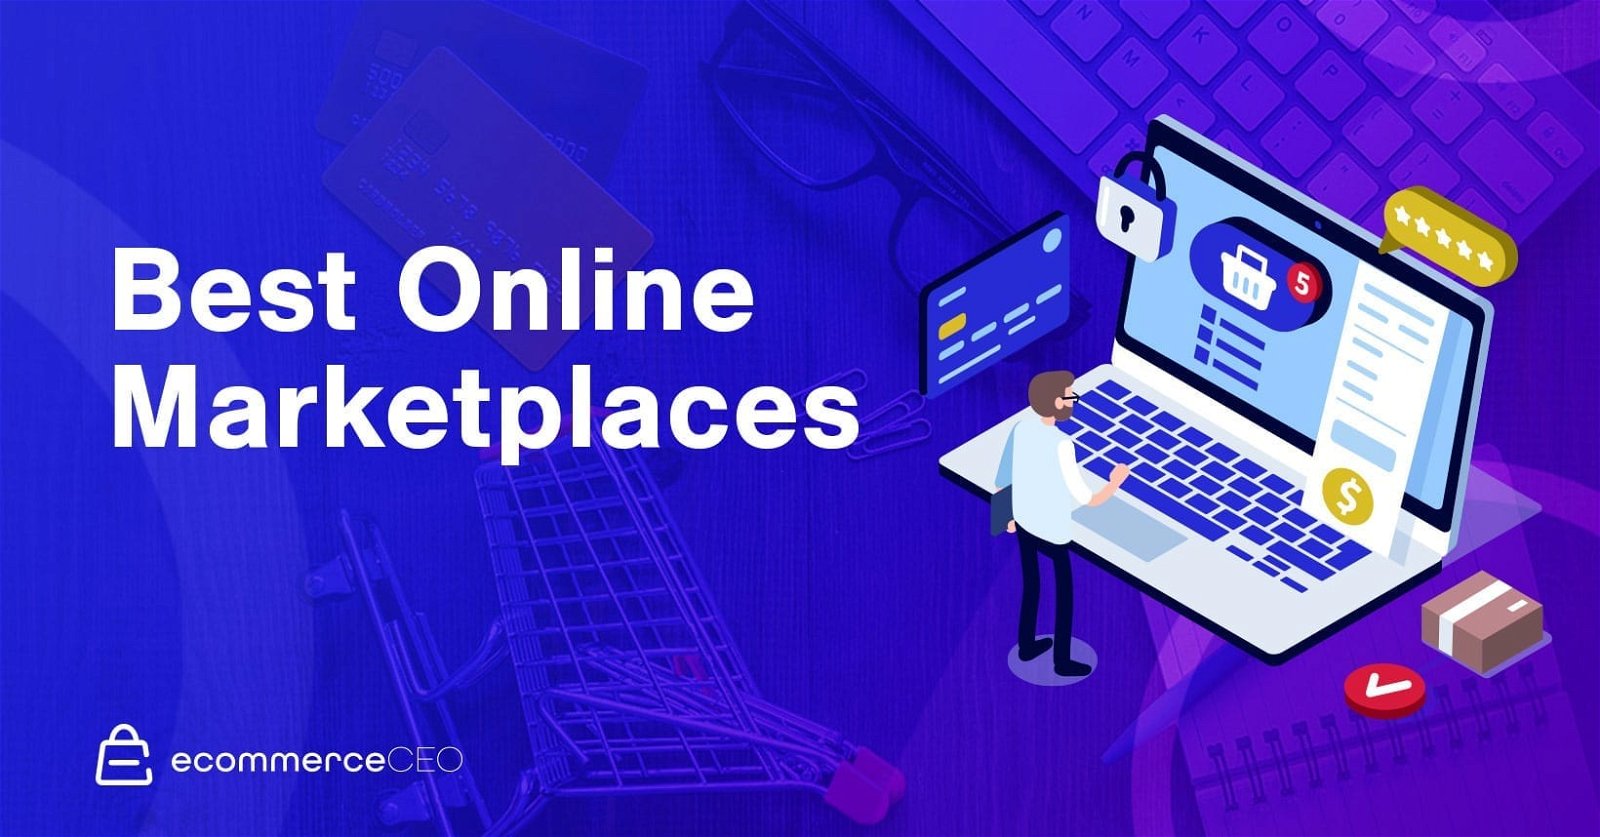 Best Online Marketplaces